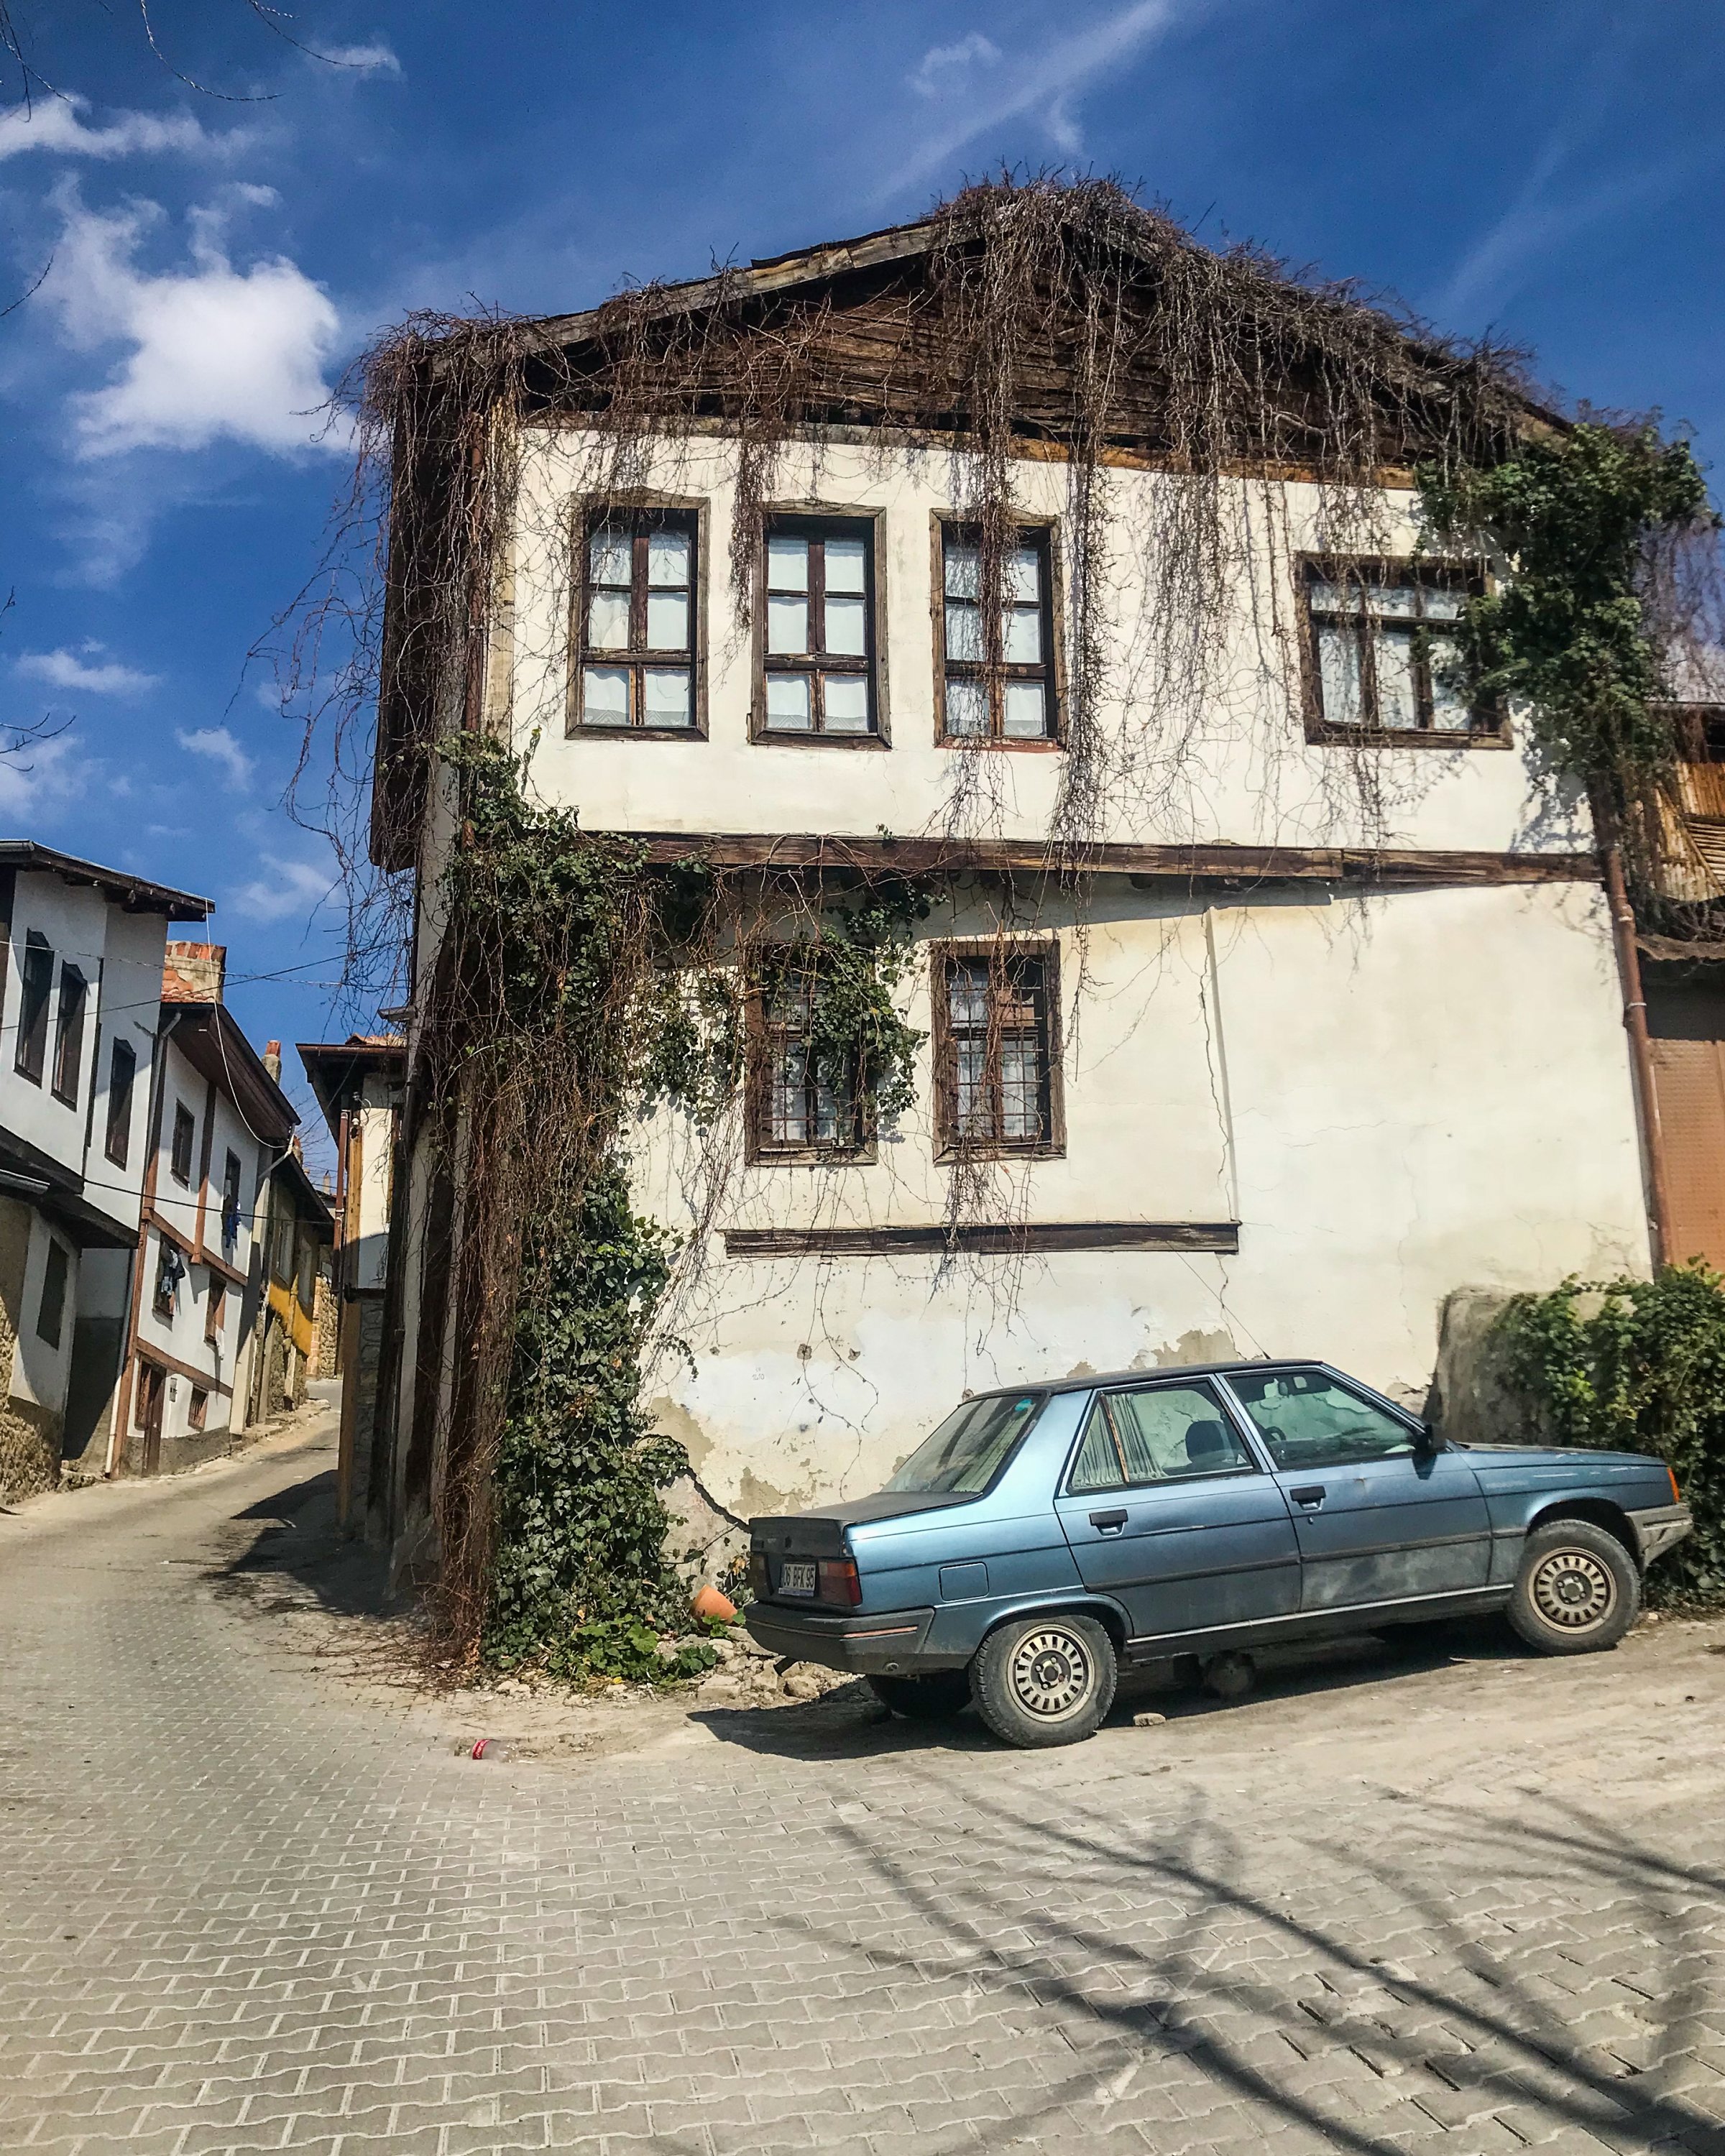 A traditional Beypazarı house. (Photo by Argun Konuk)